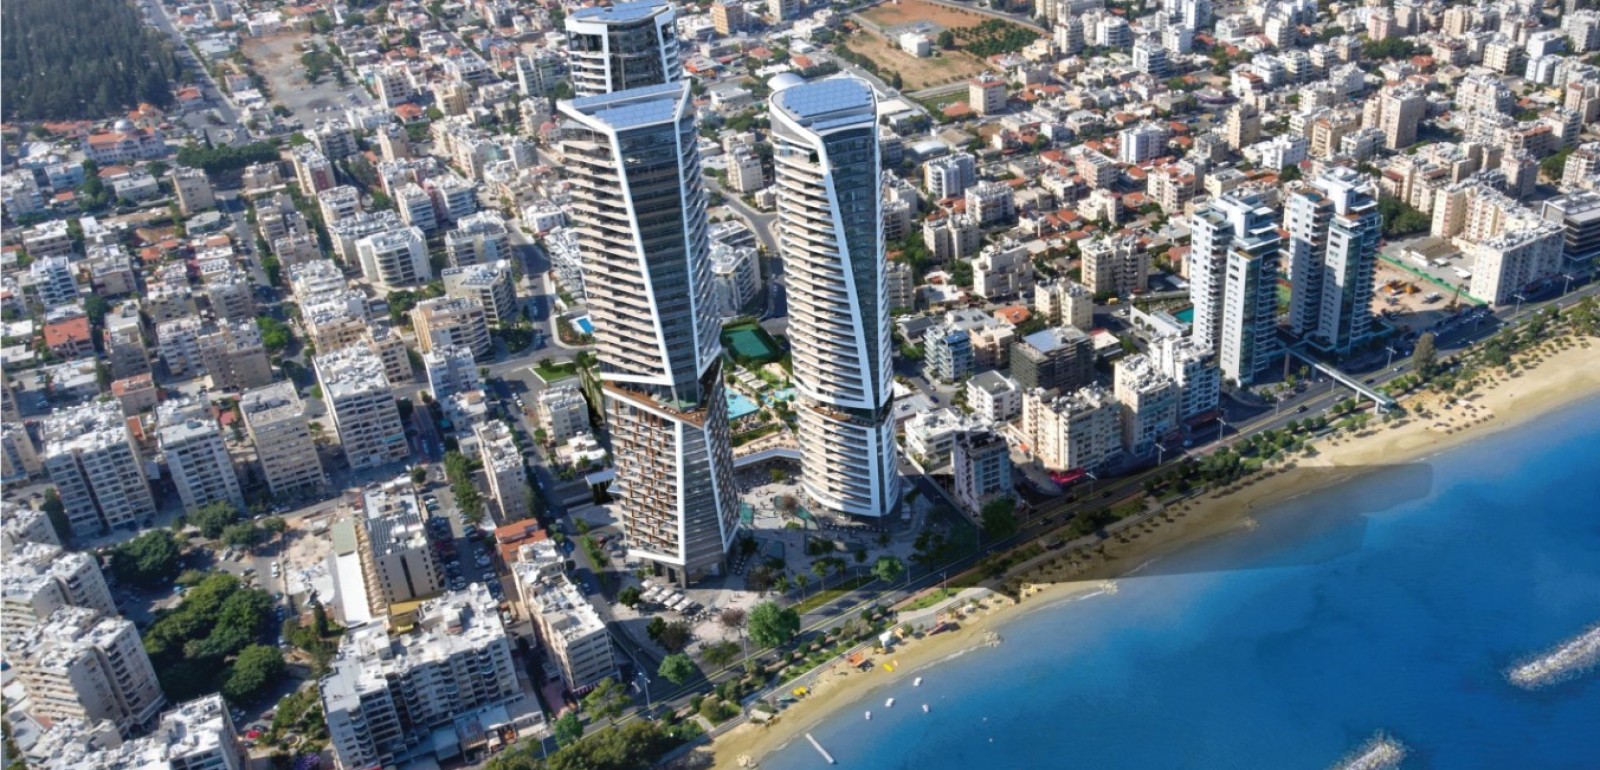 Limassol Apartment